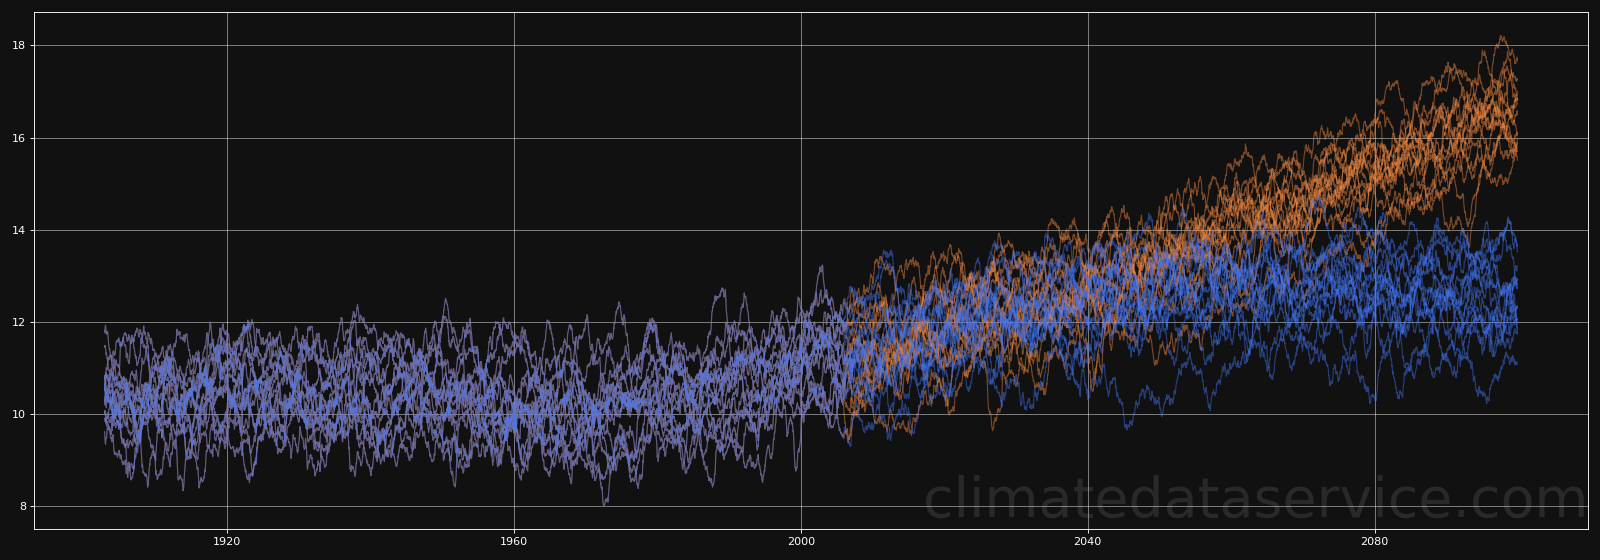 Temperature 2 year rolling mean plot of 2 scenarios 15 models for London.